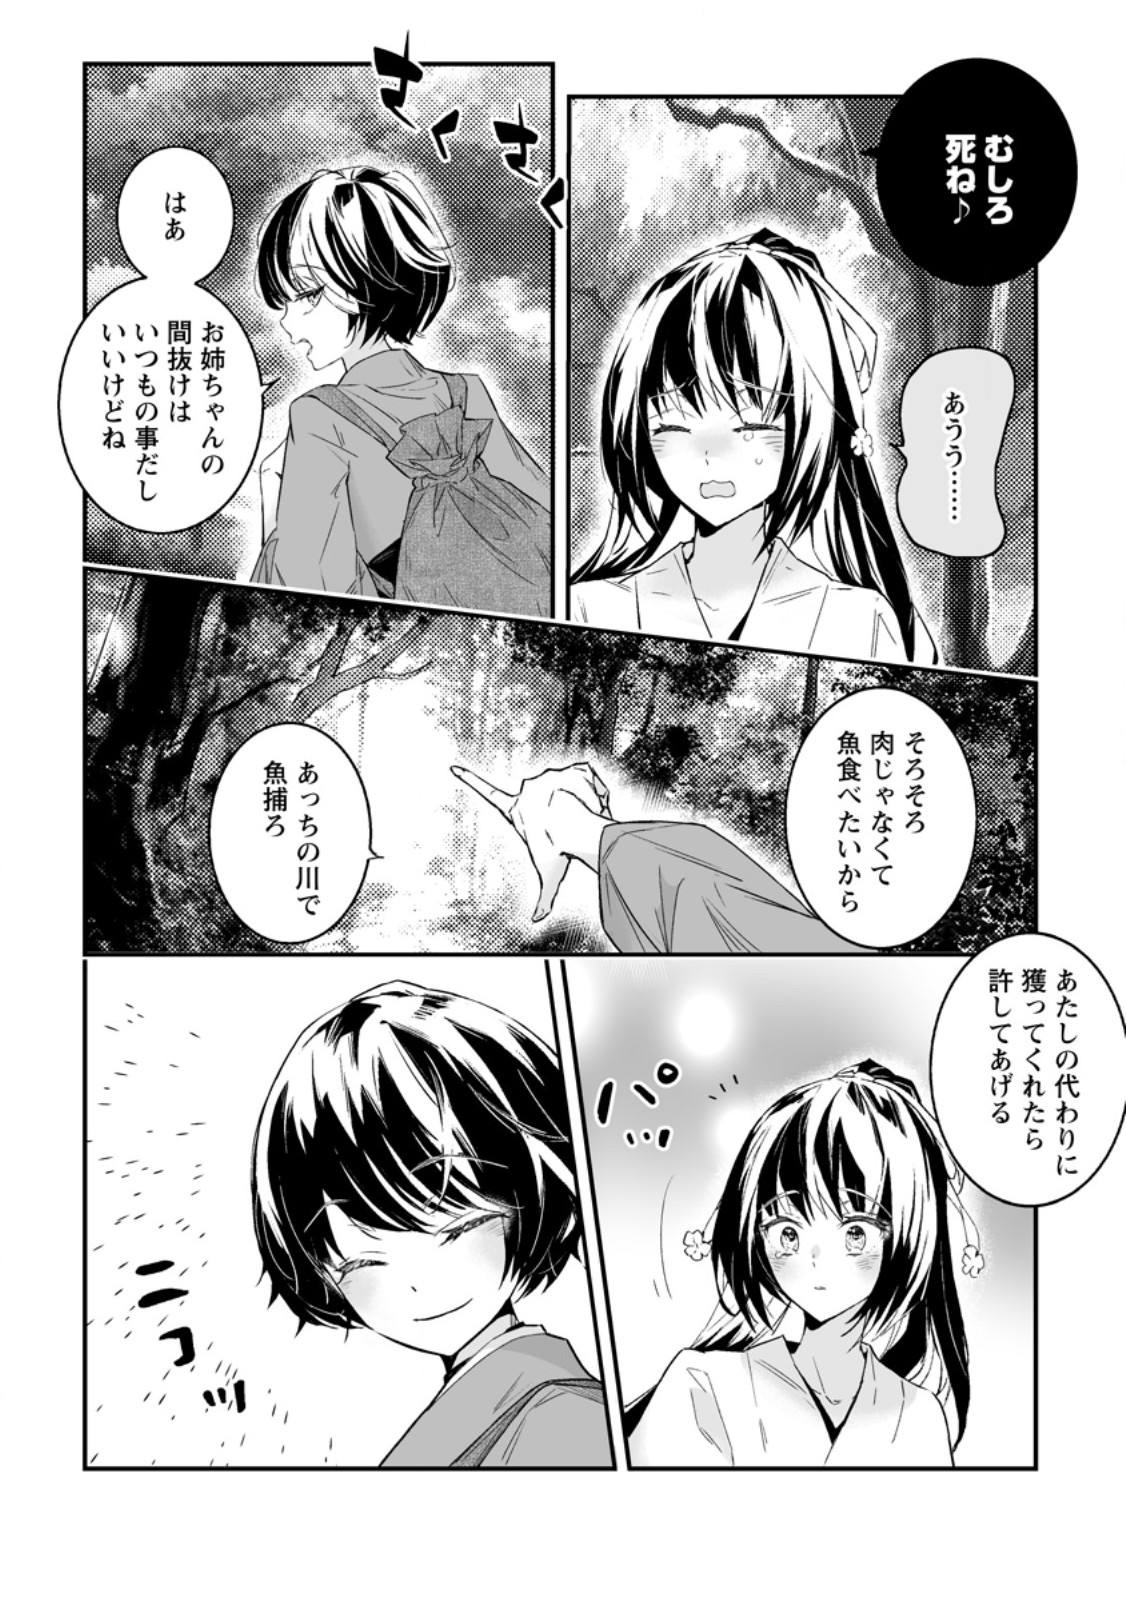 Hakui no Eiyuu - Chapter 30.3 - Page 1